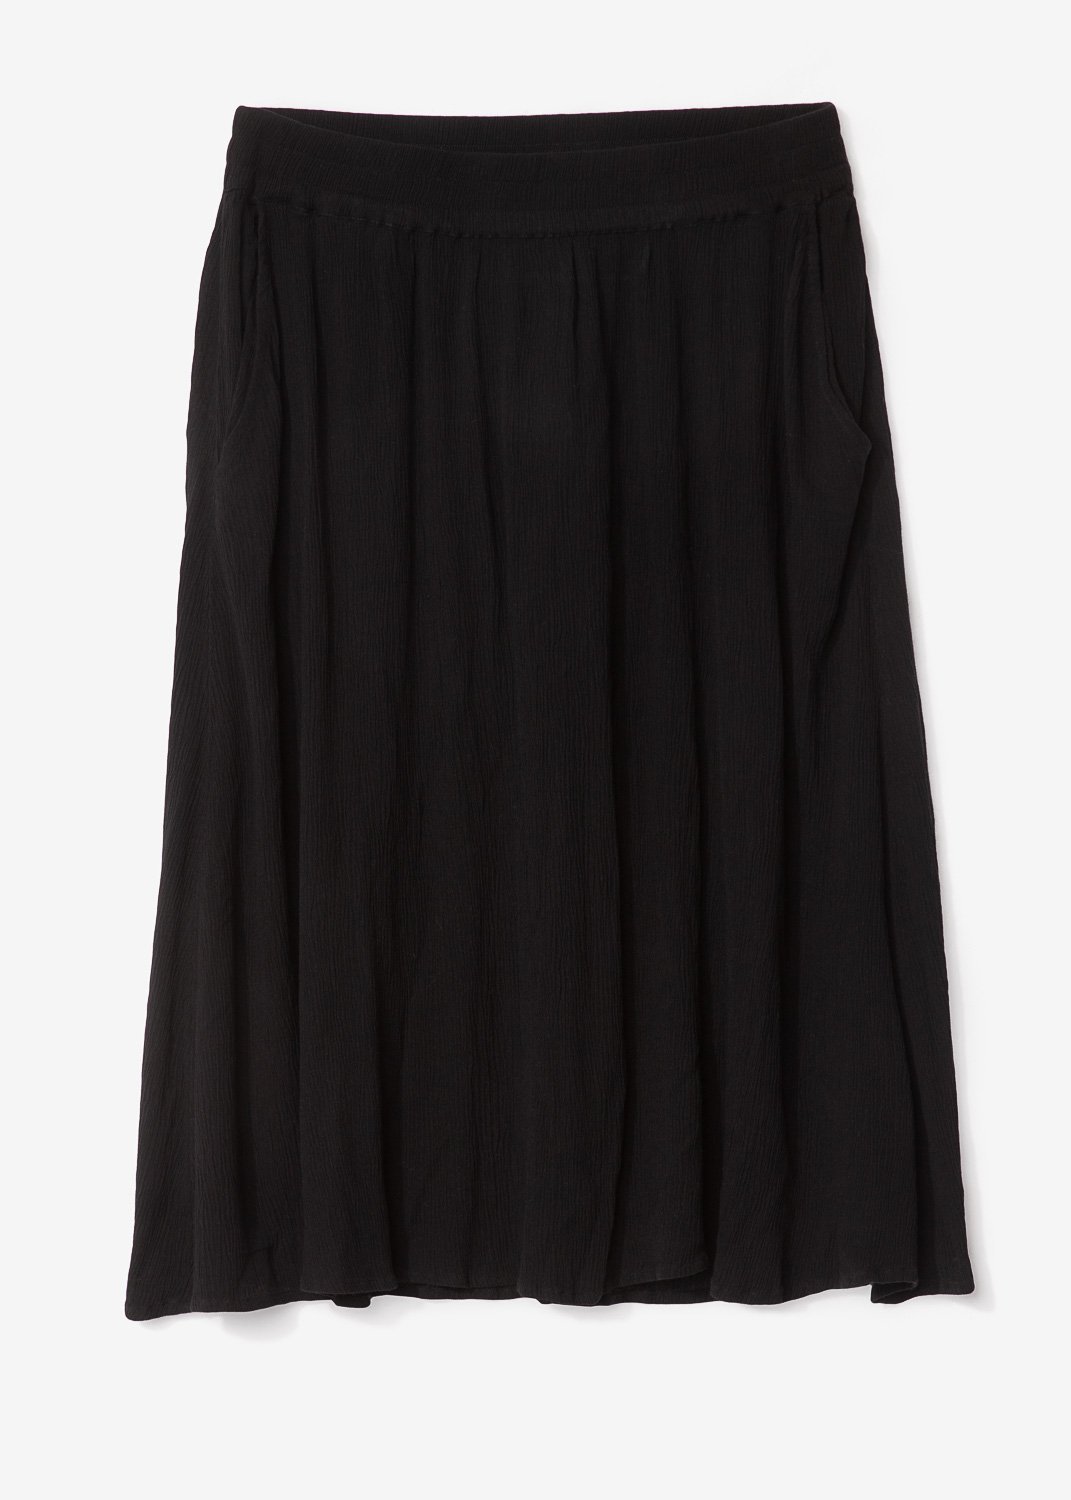 Krinklad svart kjol